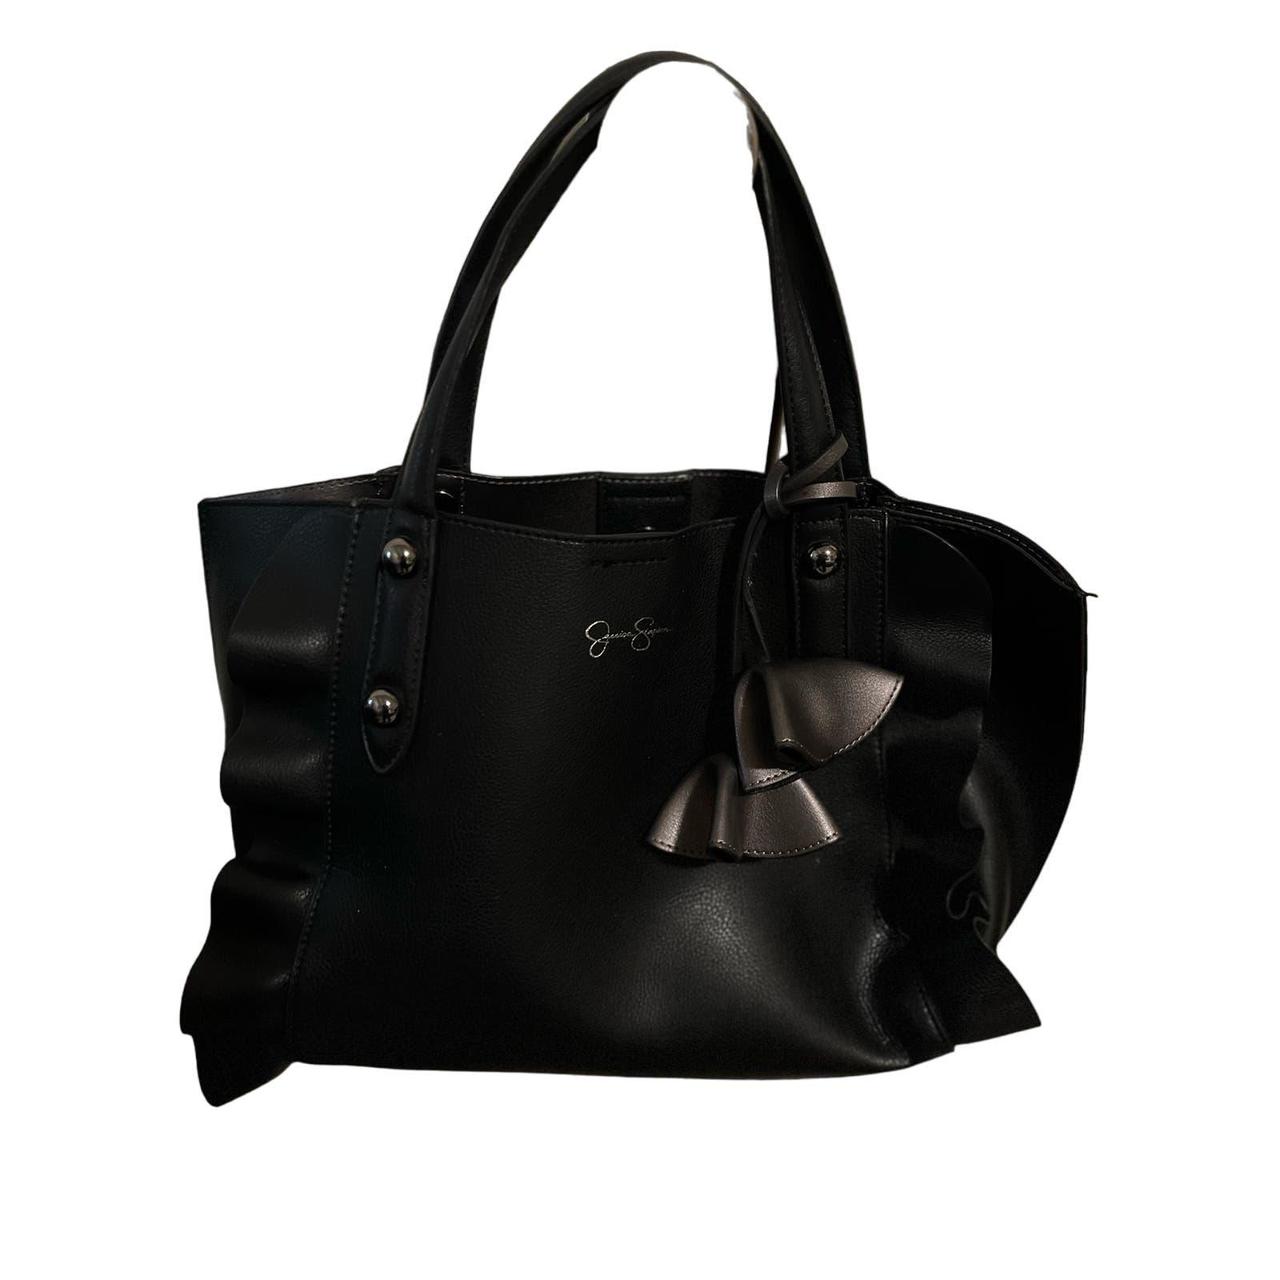 Jessica Simpson Kinsley Drawstring Cross Body Bag, Maroon, One Size :  Amazon.in: Shoes & Handbags